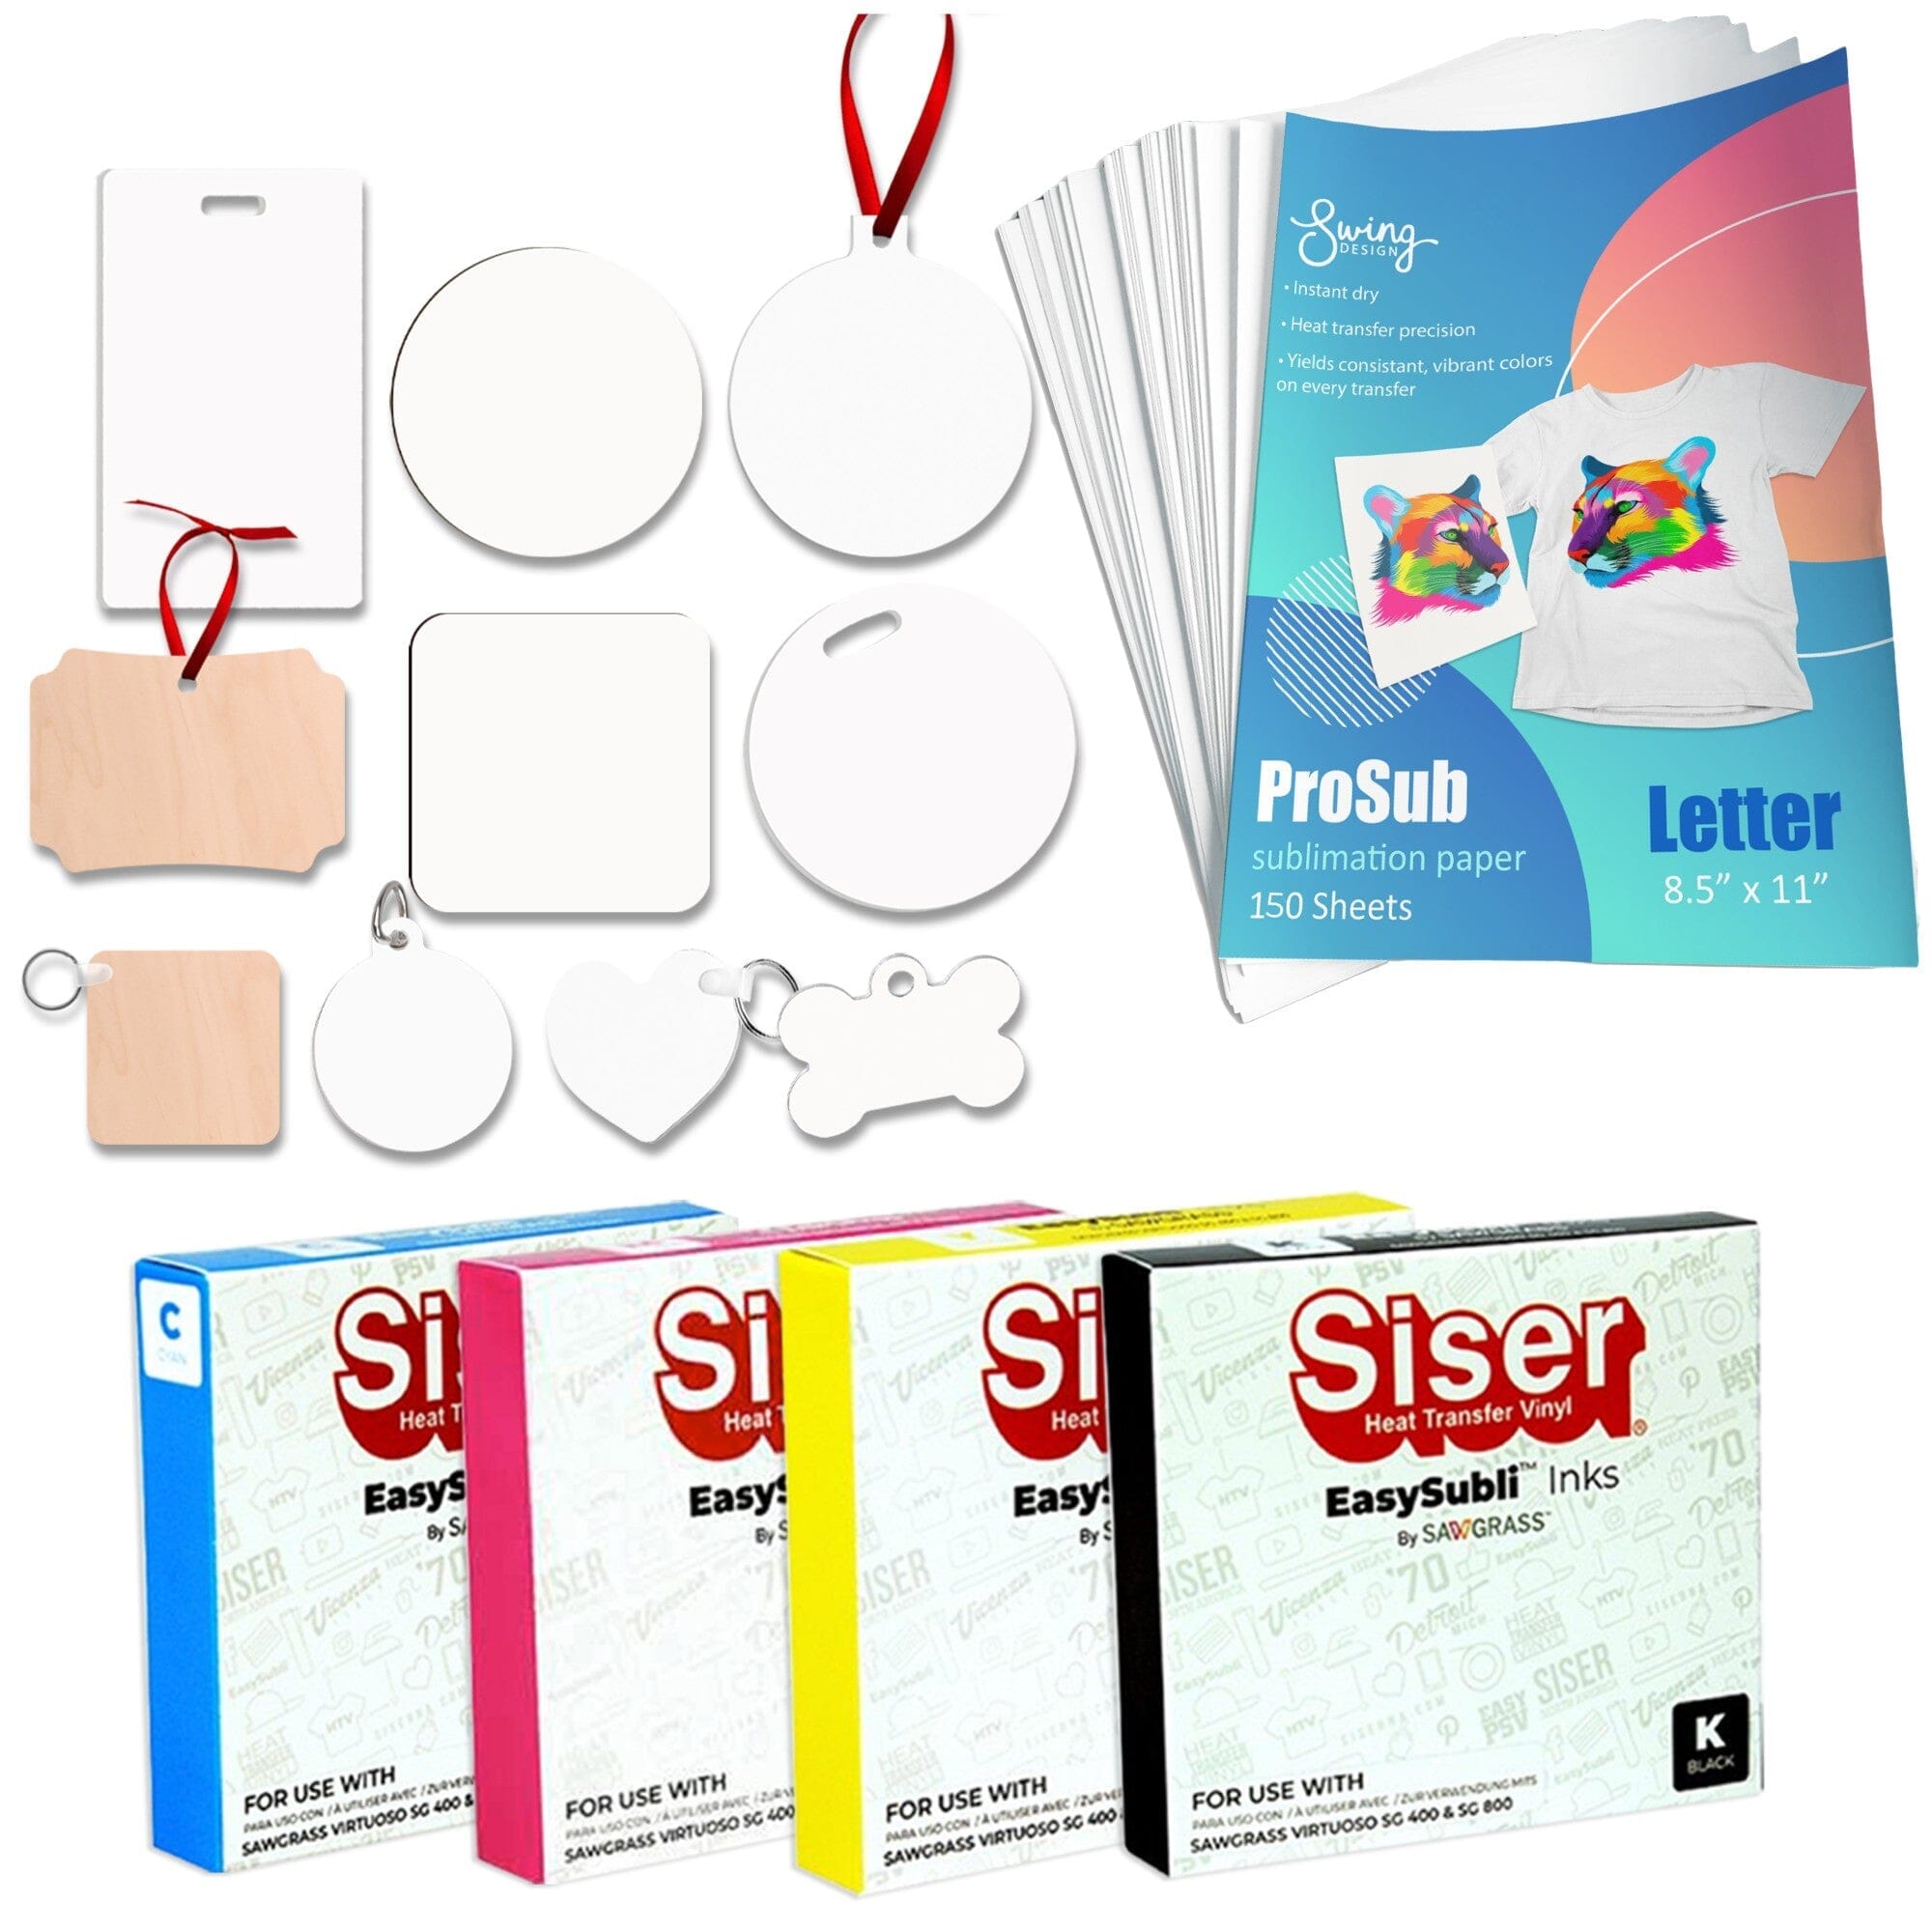  Siser EasySubli Mask Transfer Tape 8 x 10 - 50 Pack (for use  with EasySubli HTV) : Arts, Crafts & Sewing